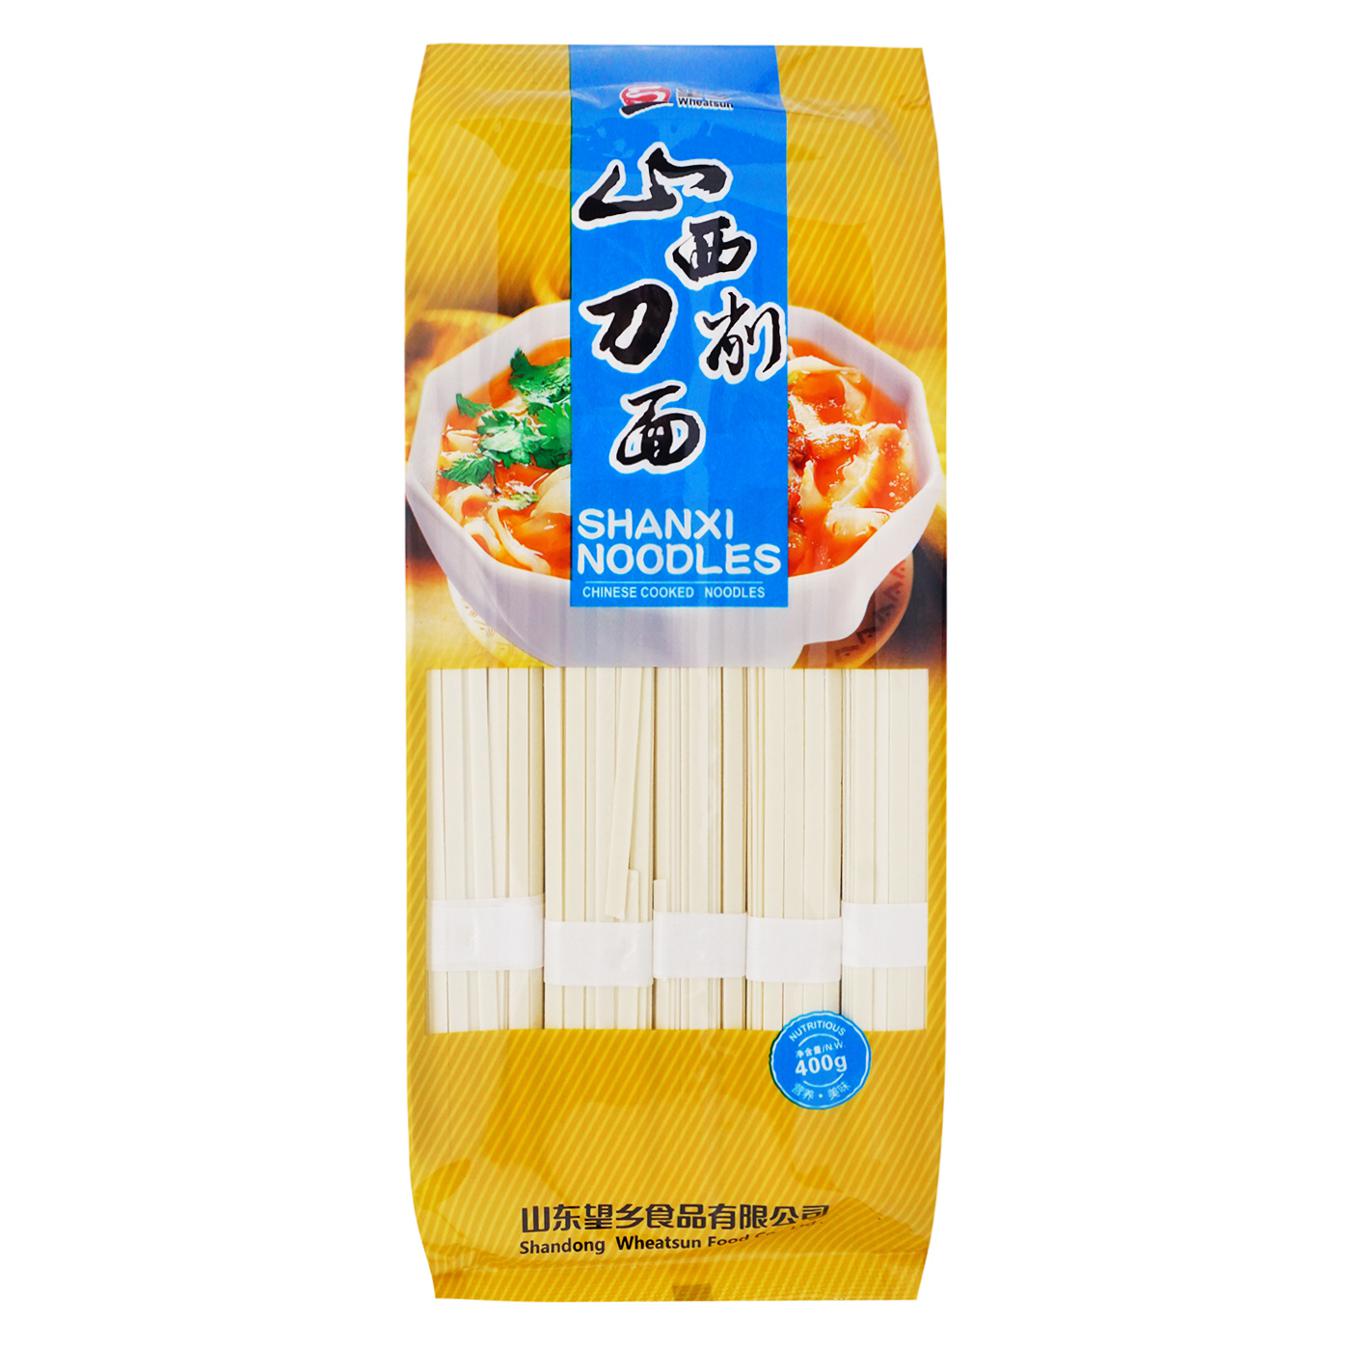 Wheatsun Shanxi wheat noodles 400g